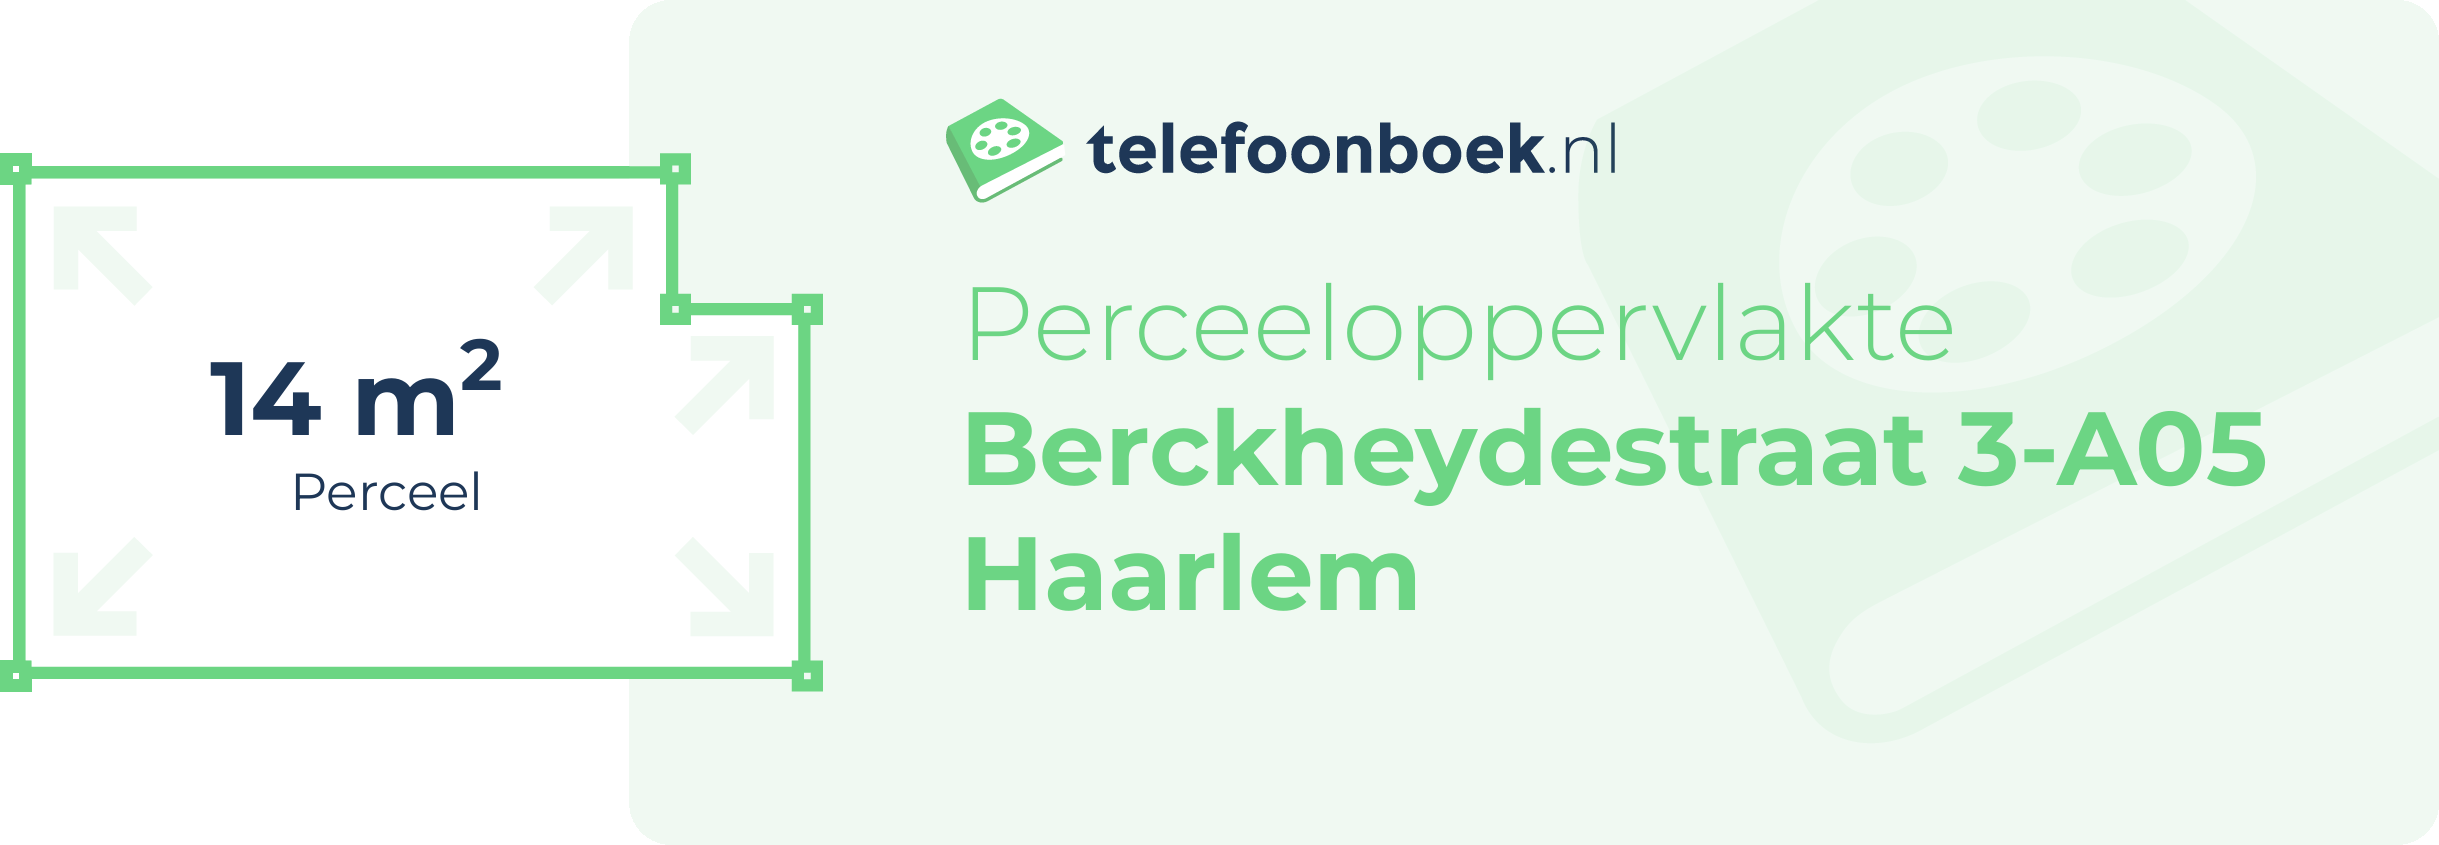 Perceeloppervlakte Berckheydestraat 3-A05 Haarlem